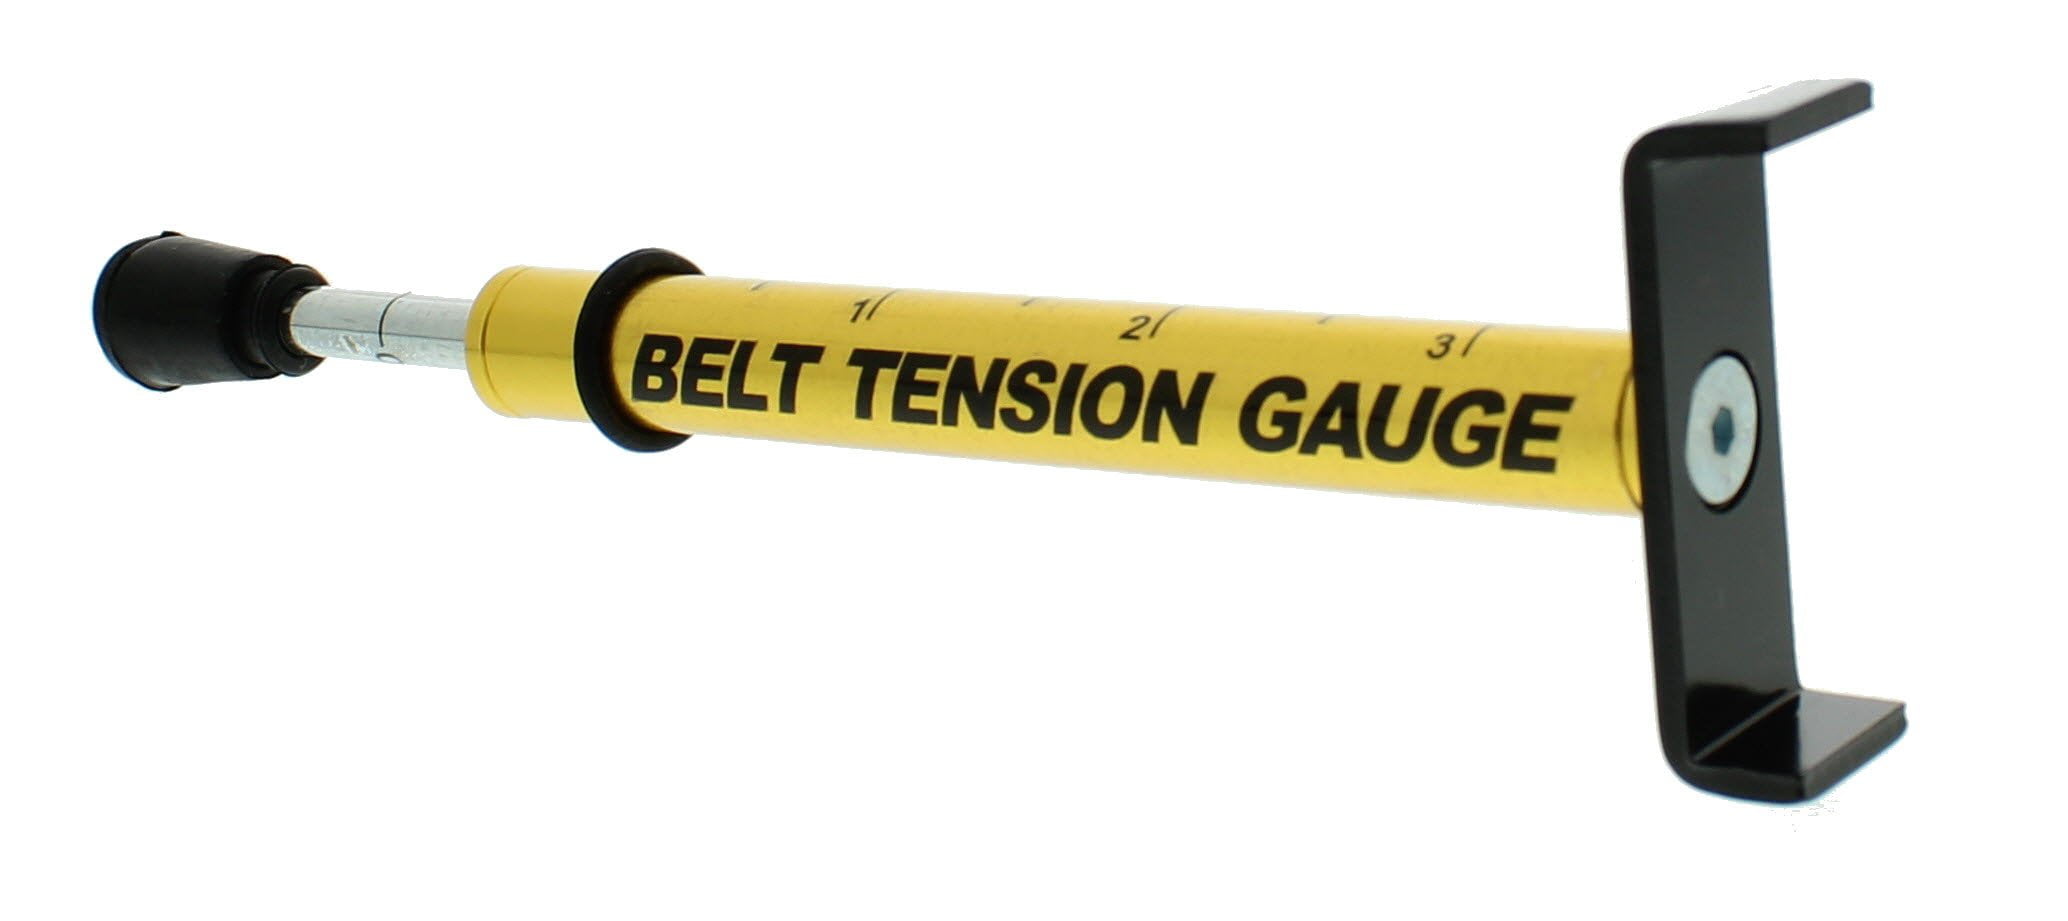 quality v belt tension checker